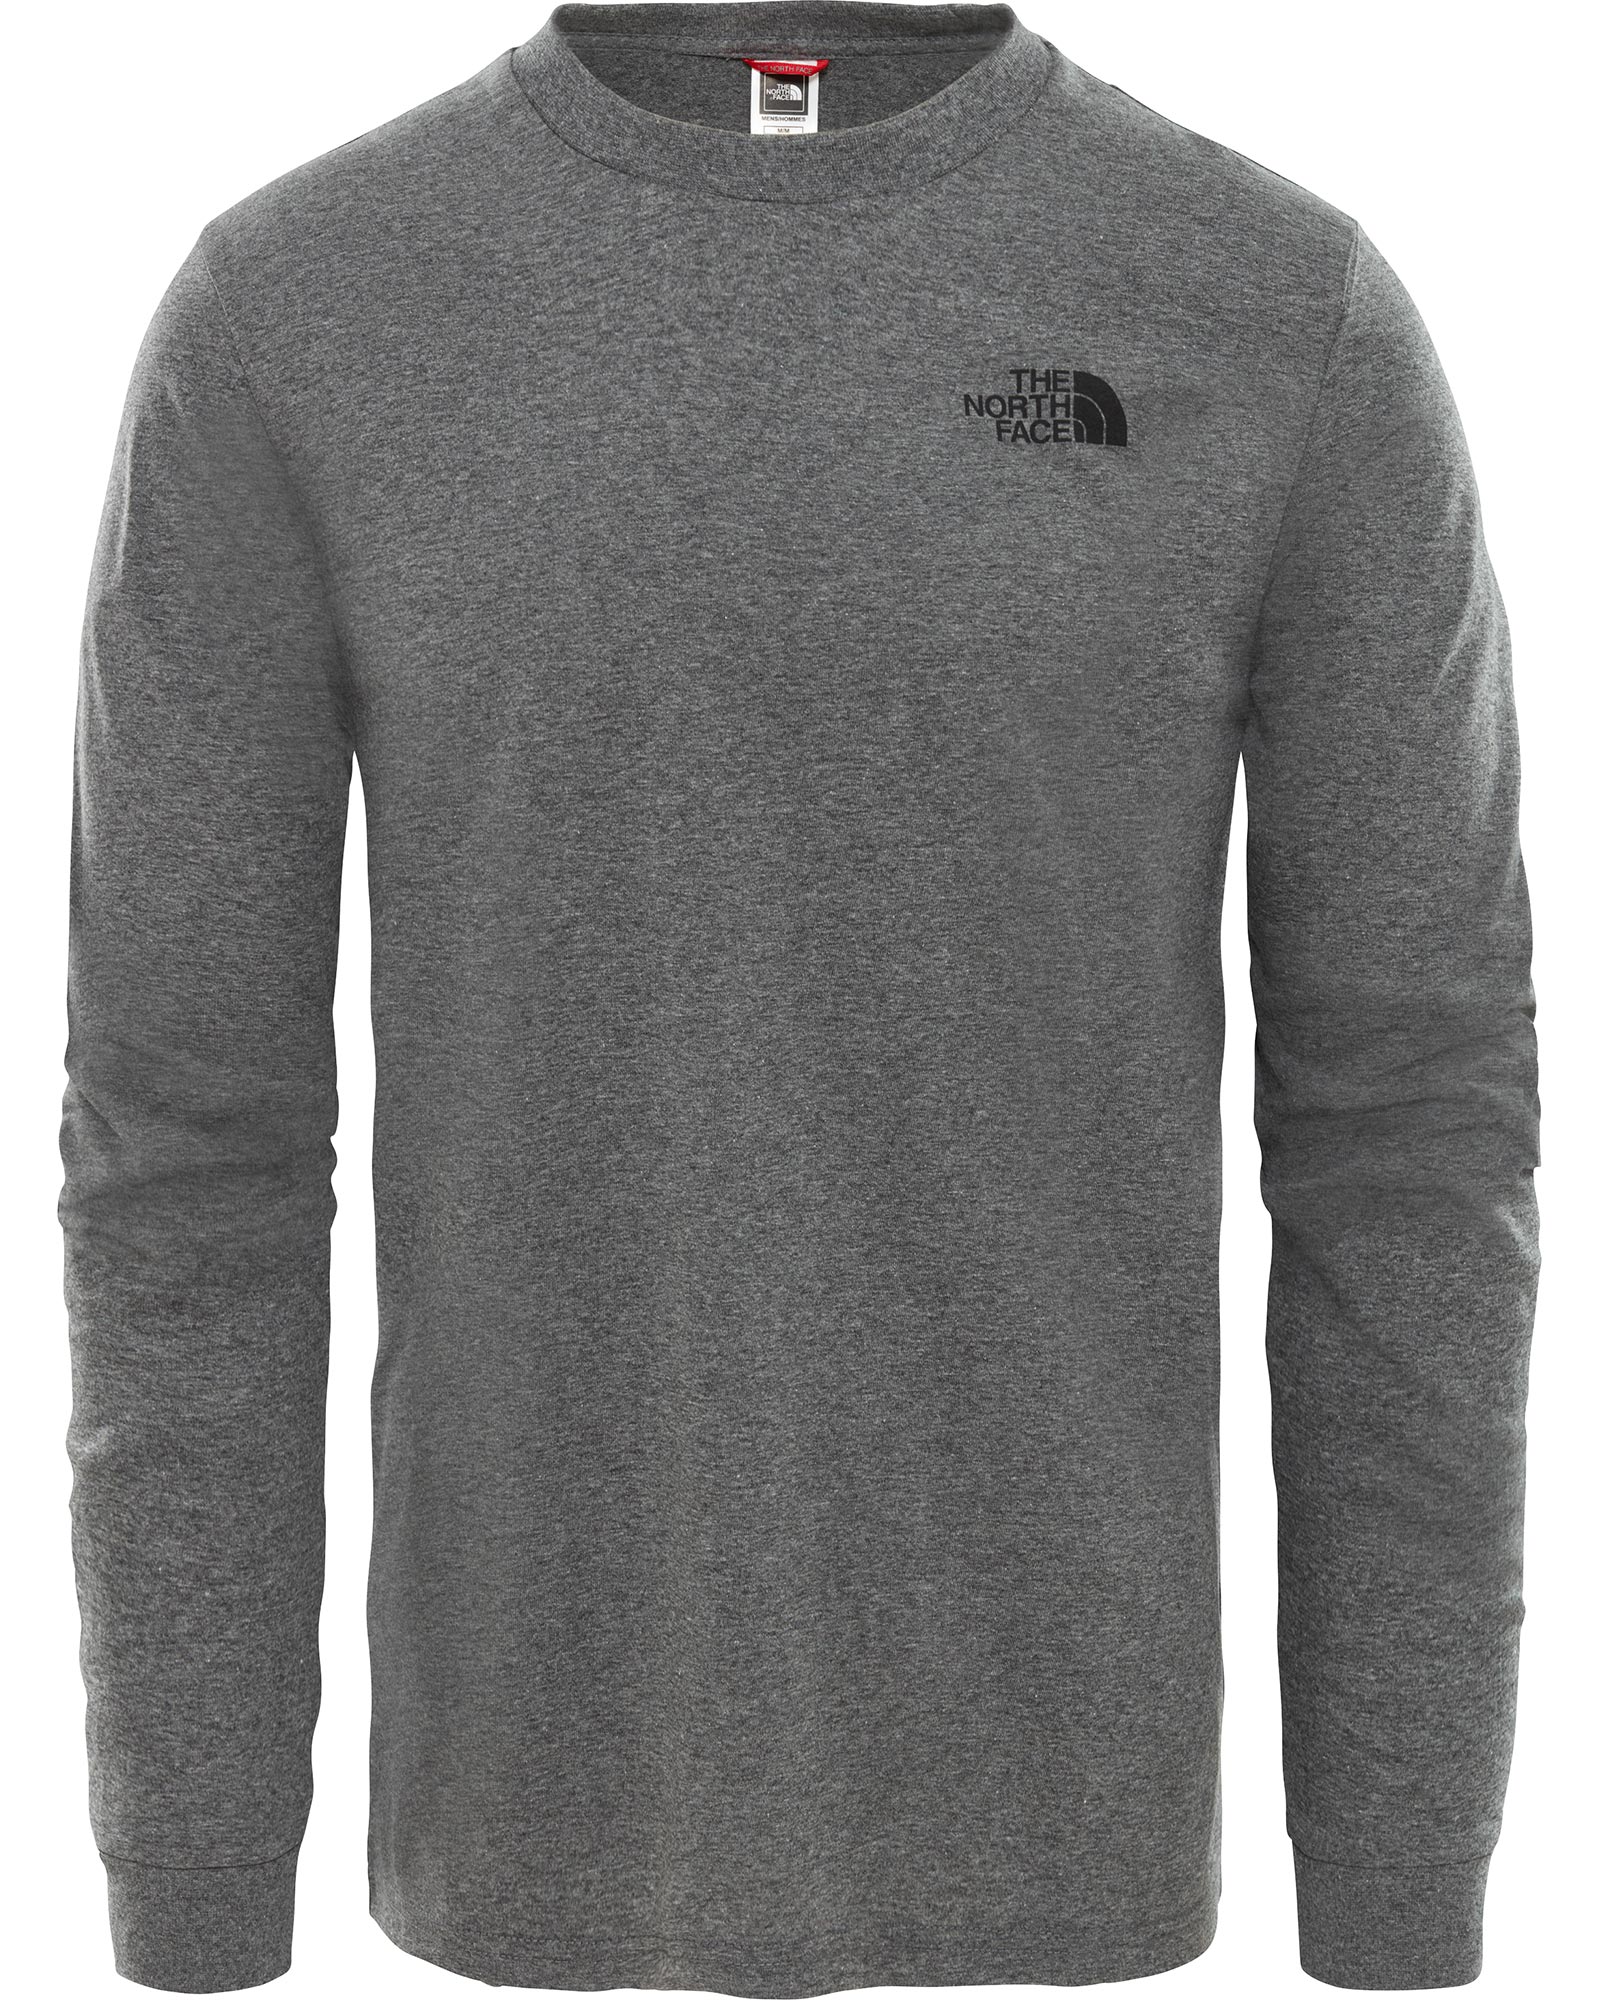 The North Face Simple Dome Men’s Long Sleeve T Shirt - TNF Medium Grey Heather XL